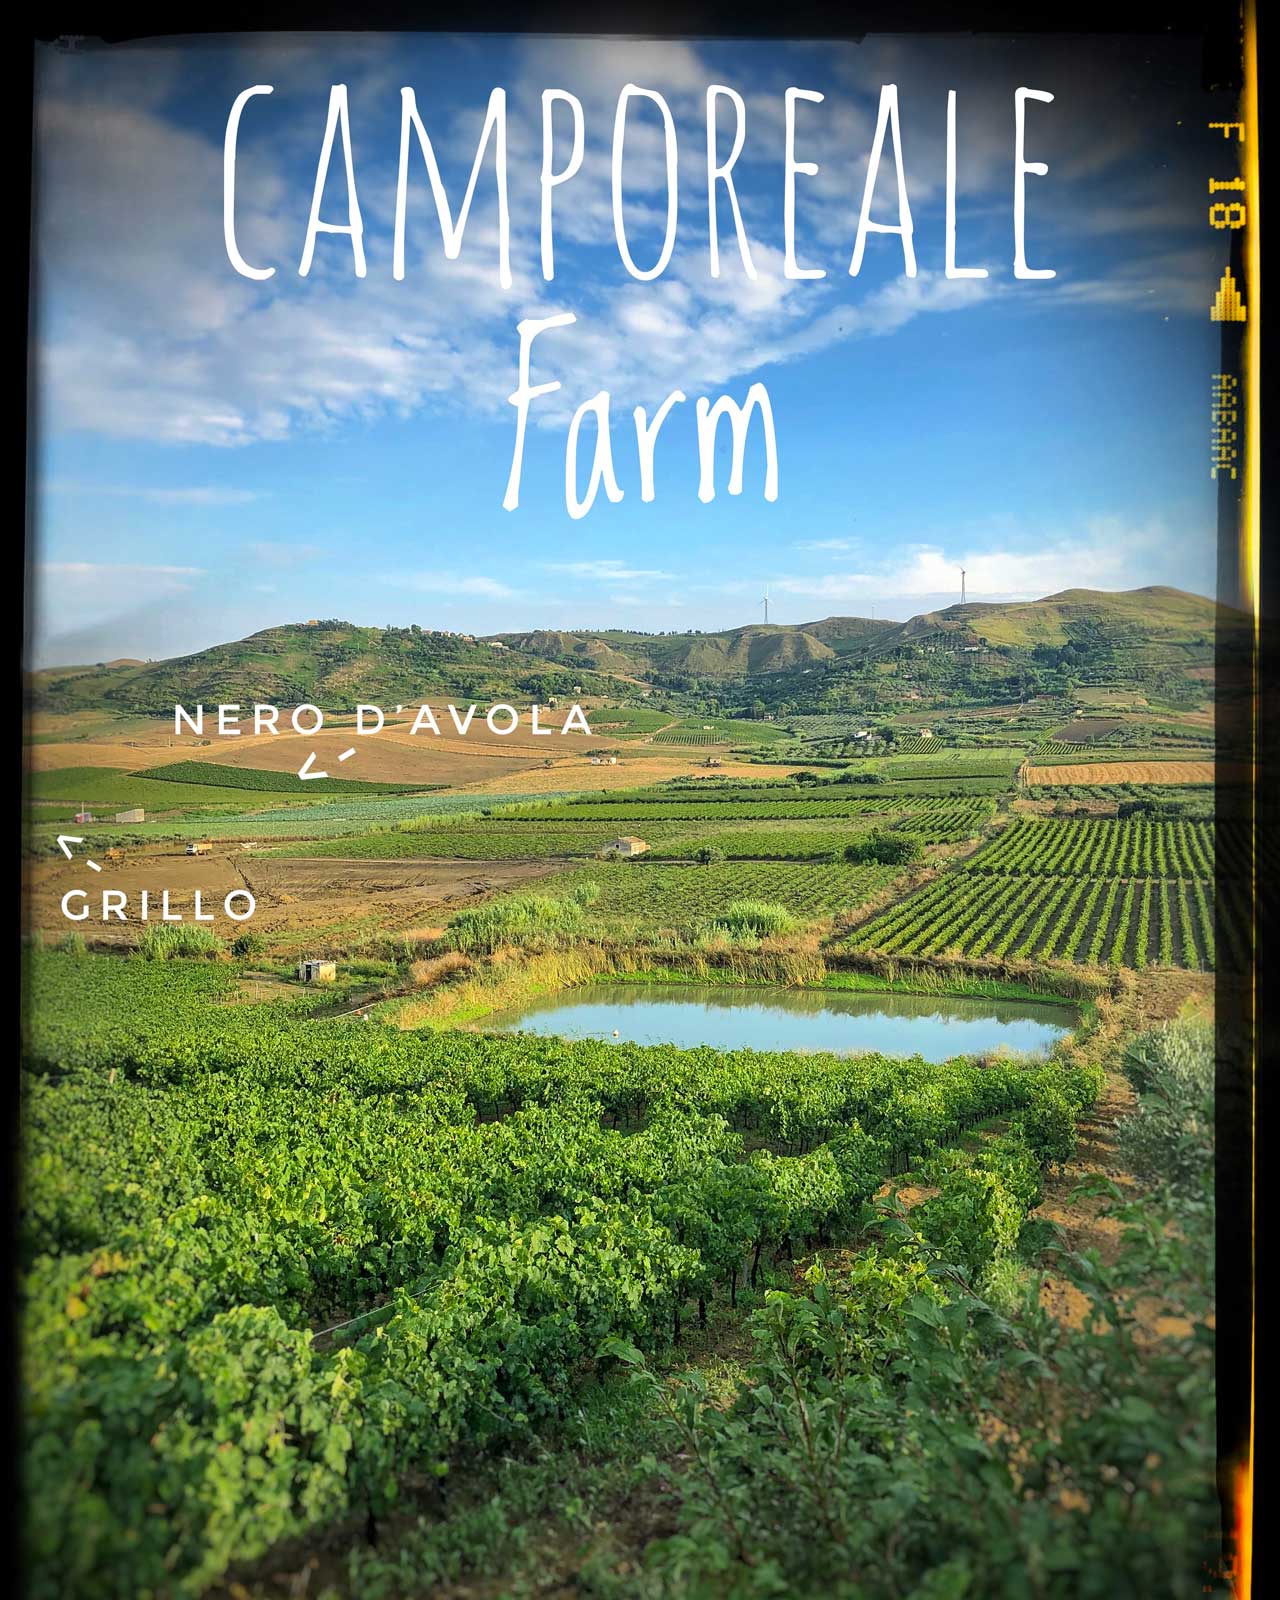 Natural wine organic farm -red wine and white wine - grillo and nero d'avola grapes - Camporeale of Elios Sicily | Italy